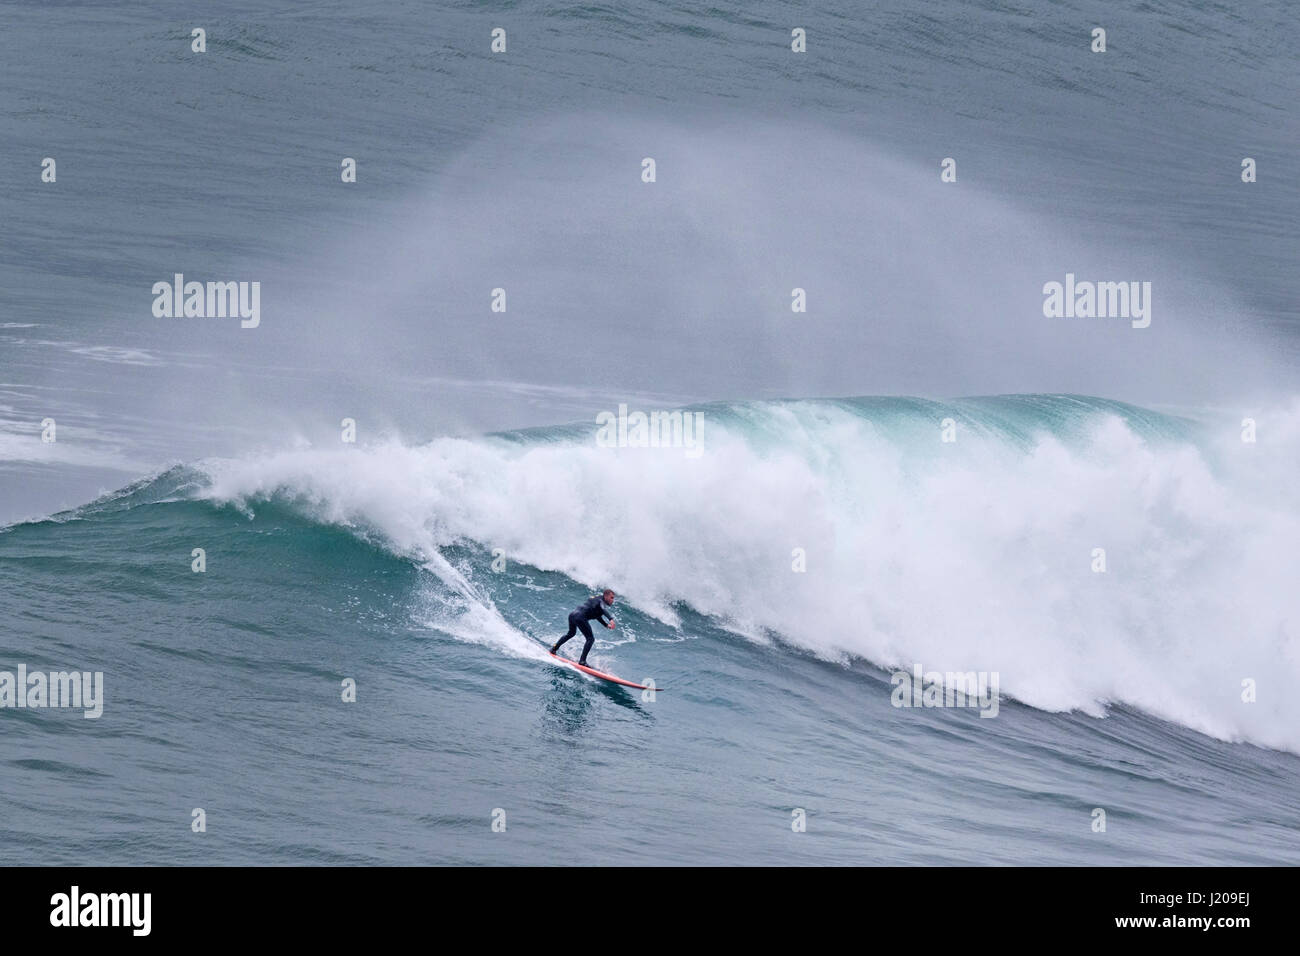 Surfer am Surfbrett Reiten Welle, Nazare, Portugal, Europa Stockfoto